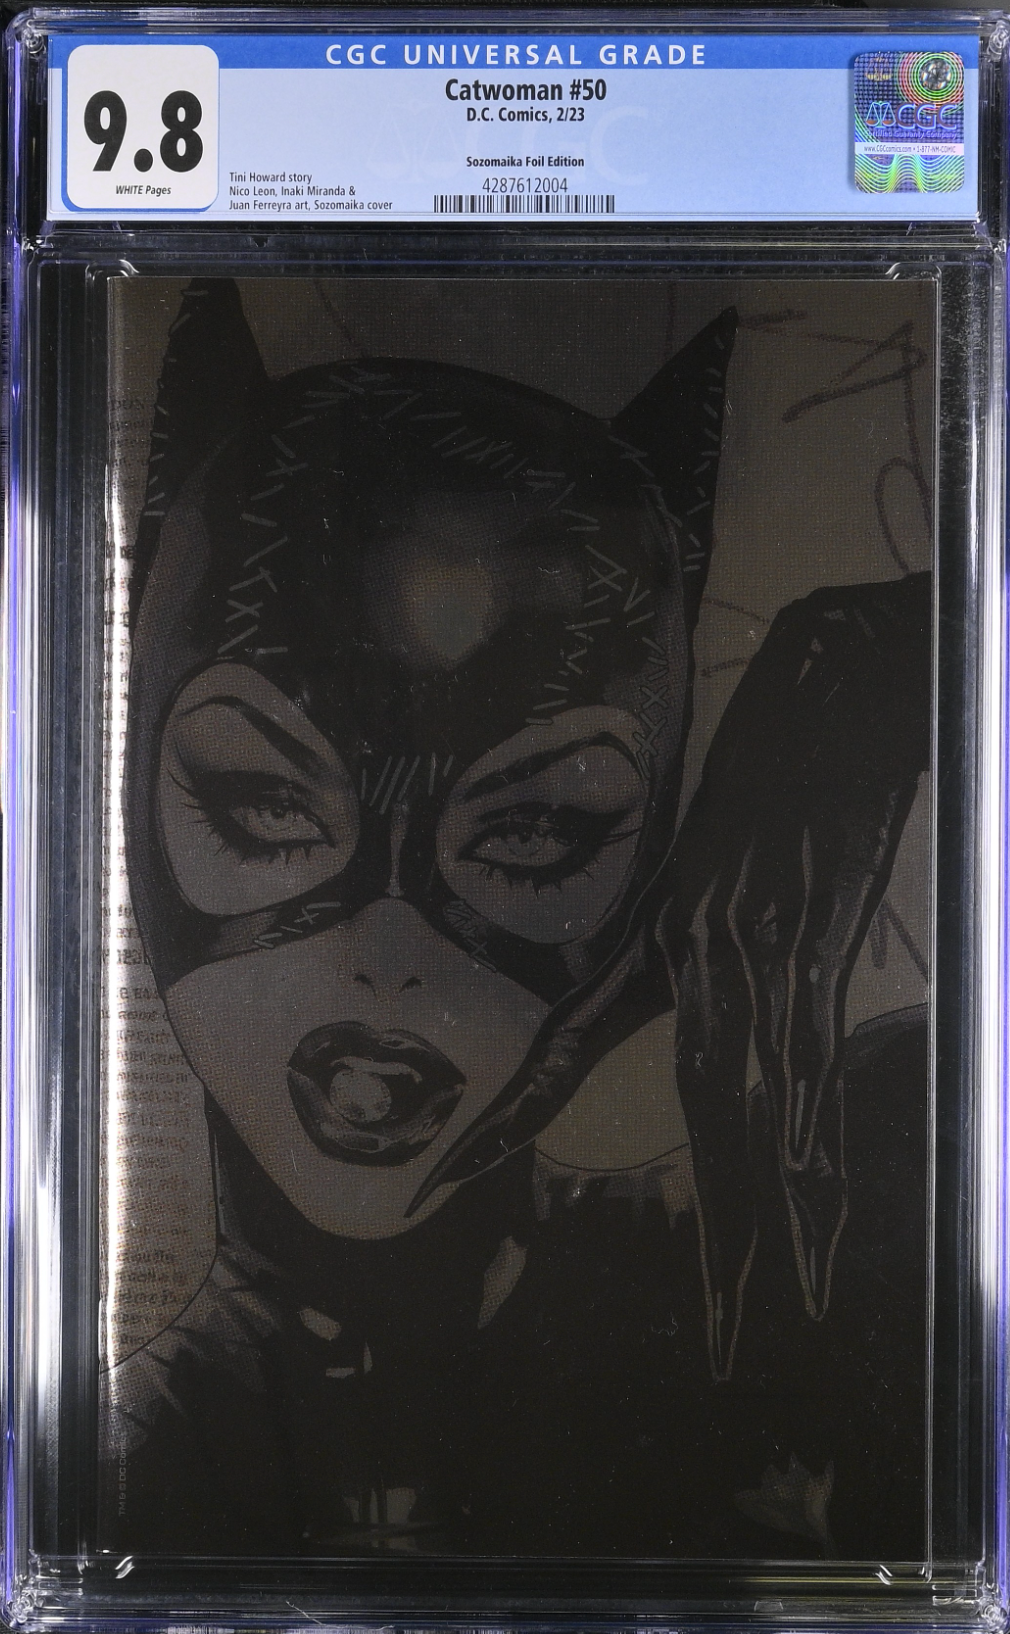 Catwoman #50 Sozomaika 1:50 Foil Retailer Incentive Variant CGC 9.8